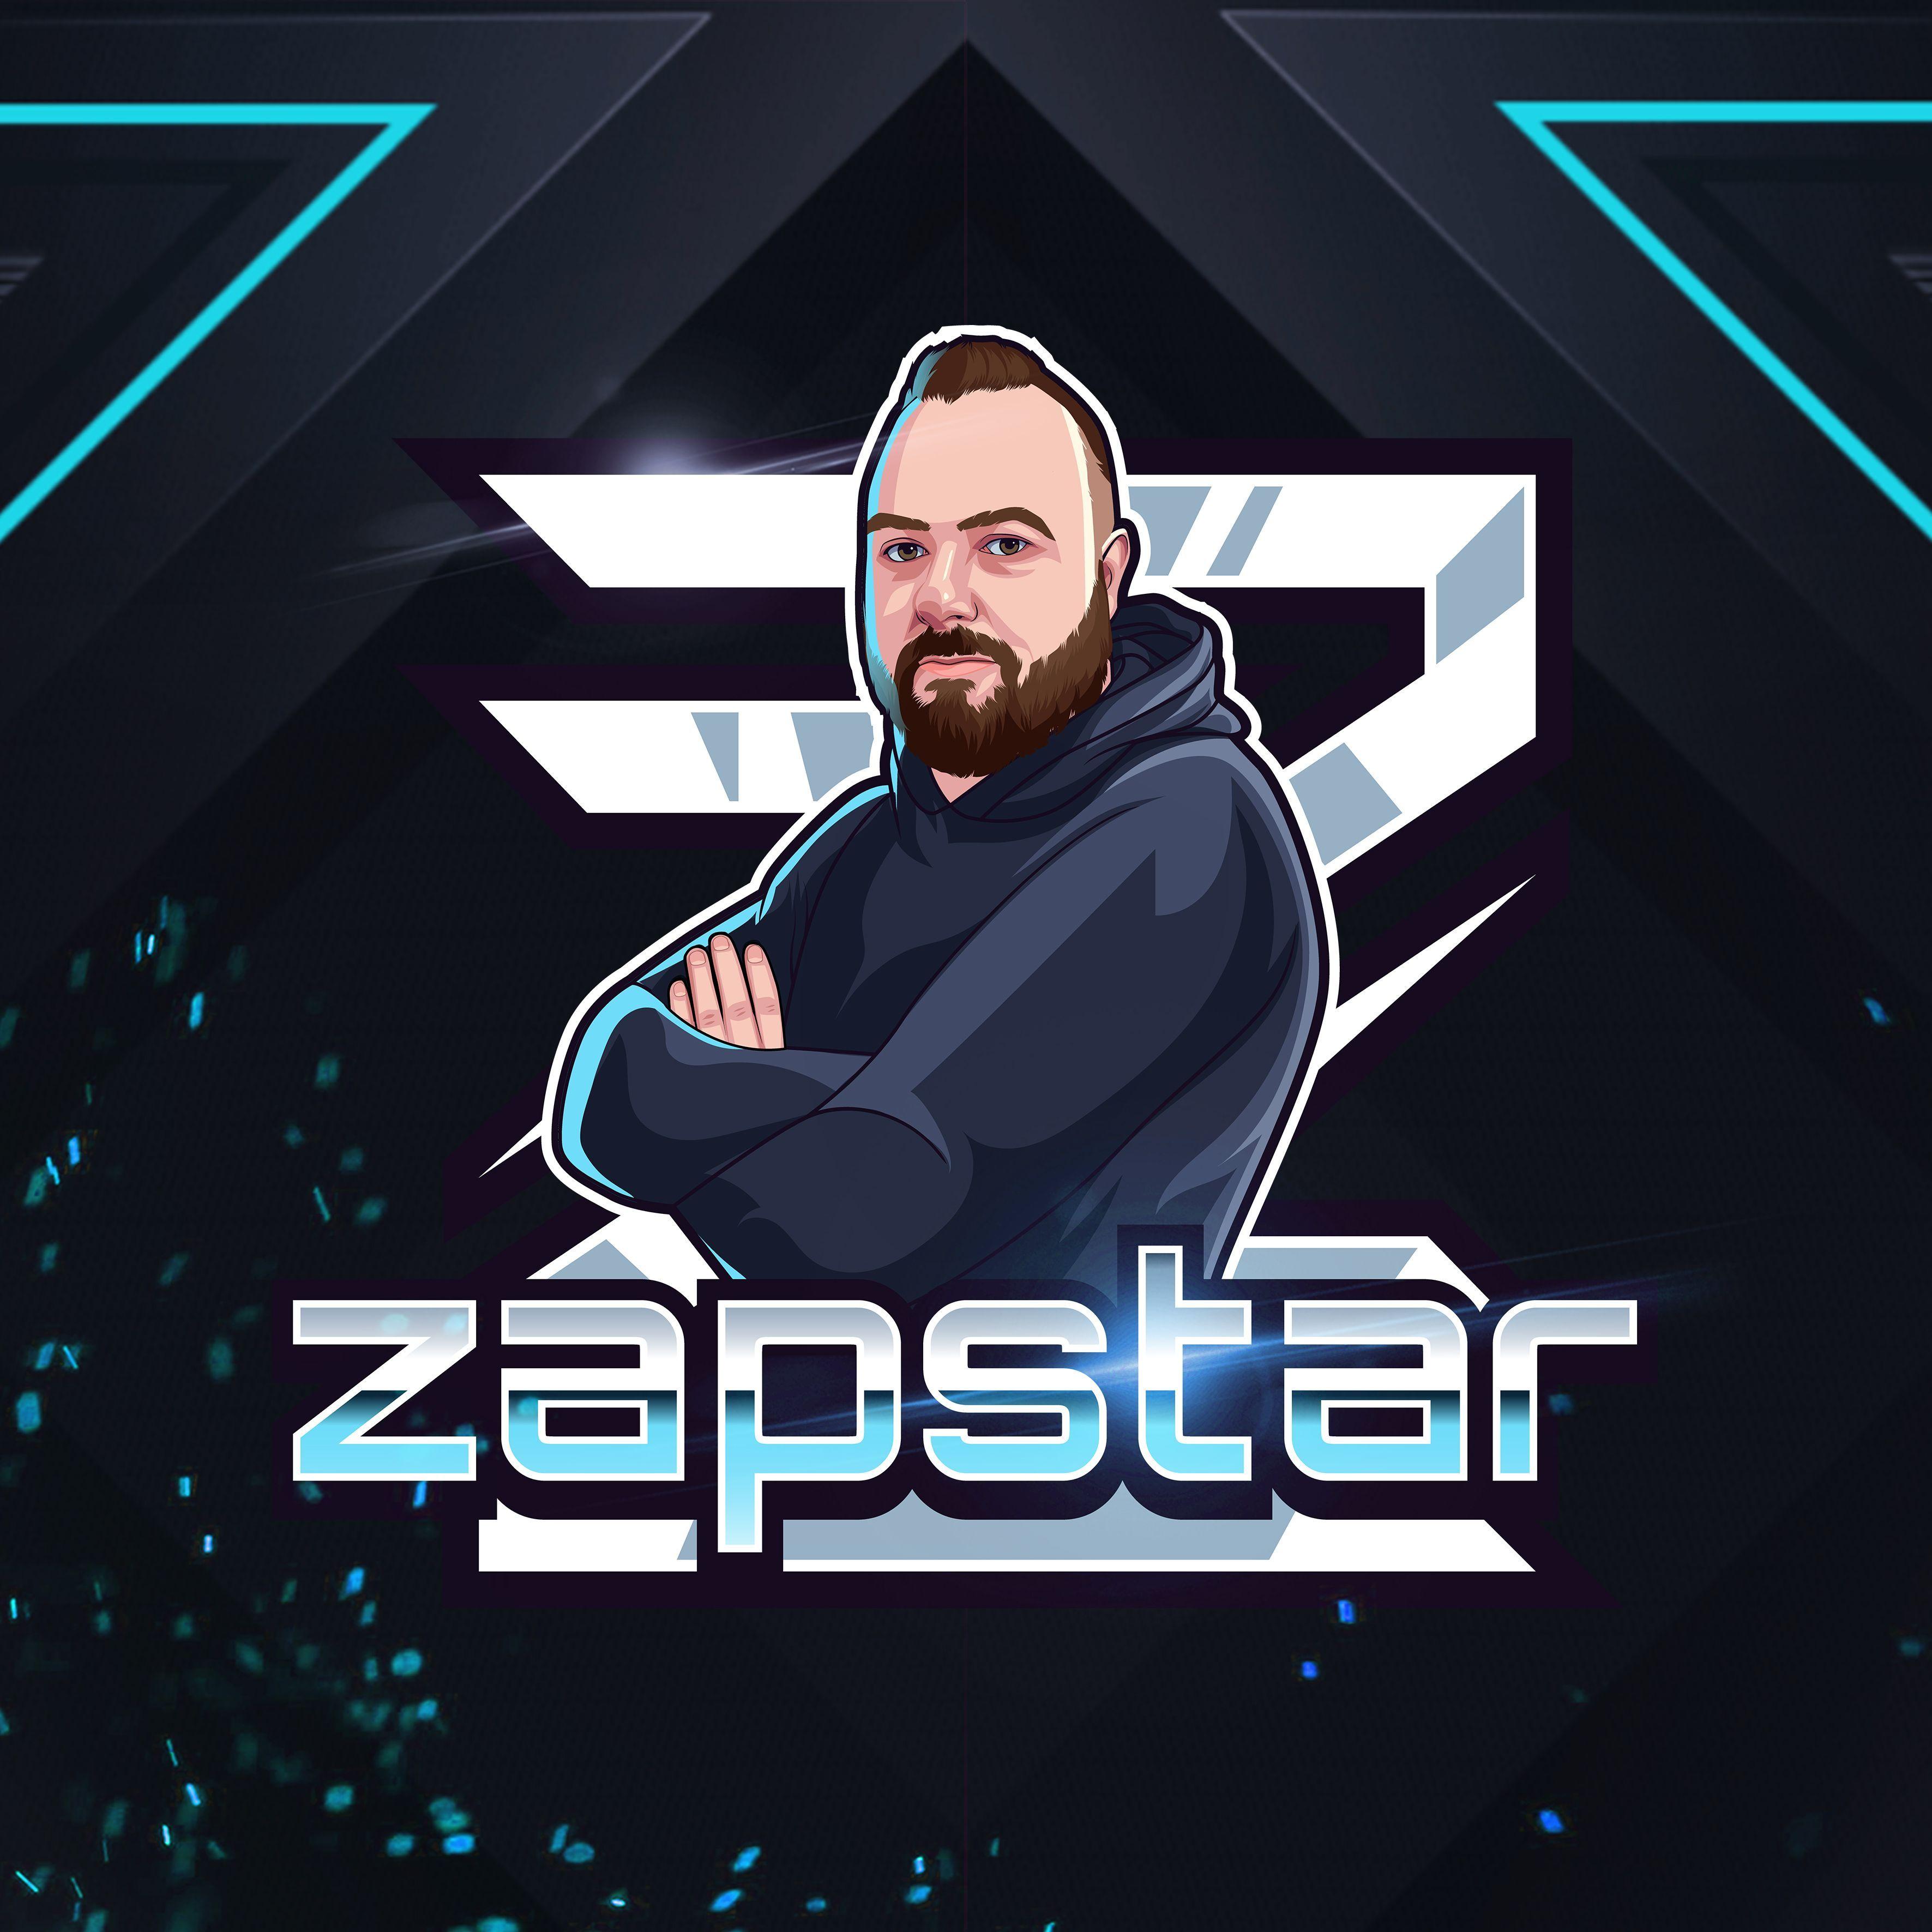 Player z4pst4r avatar